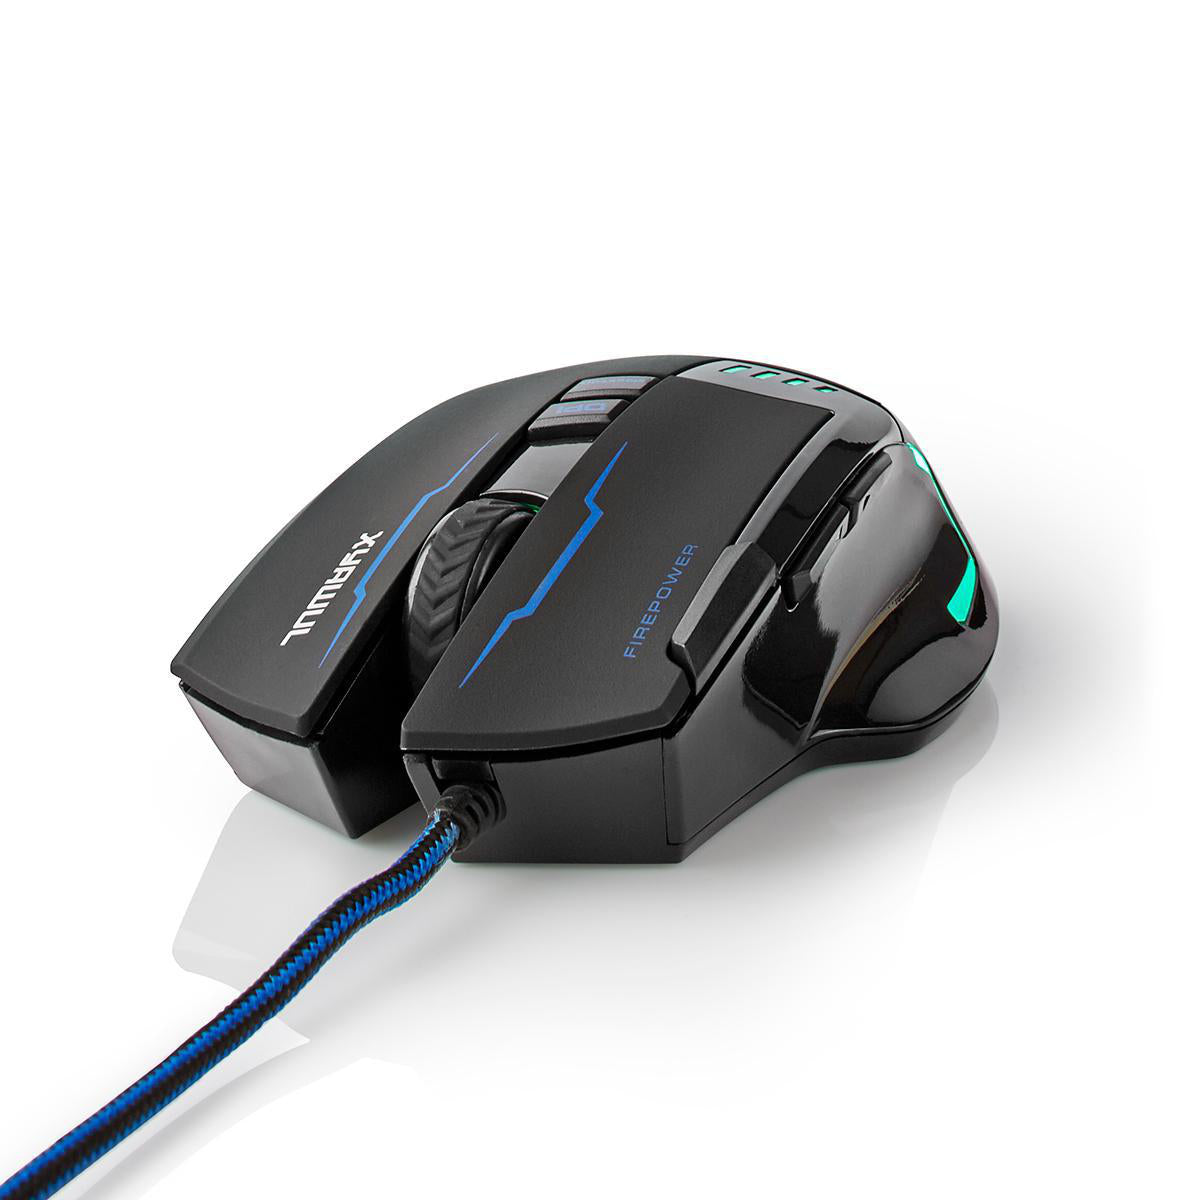 Gaming Maus Optische USB Gamer Mouse 4000DPI Beleuchtet 8 Tasten LED PC Computer